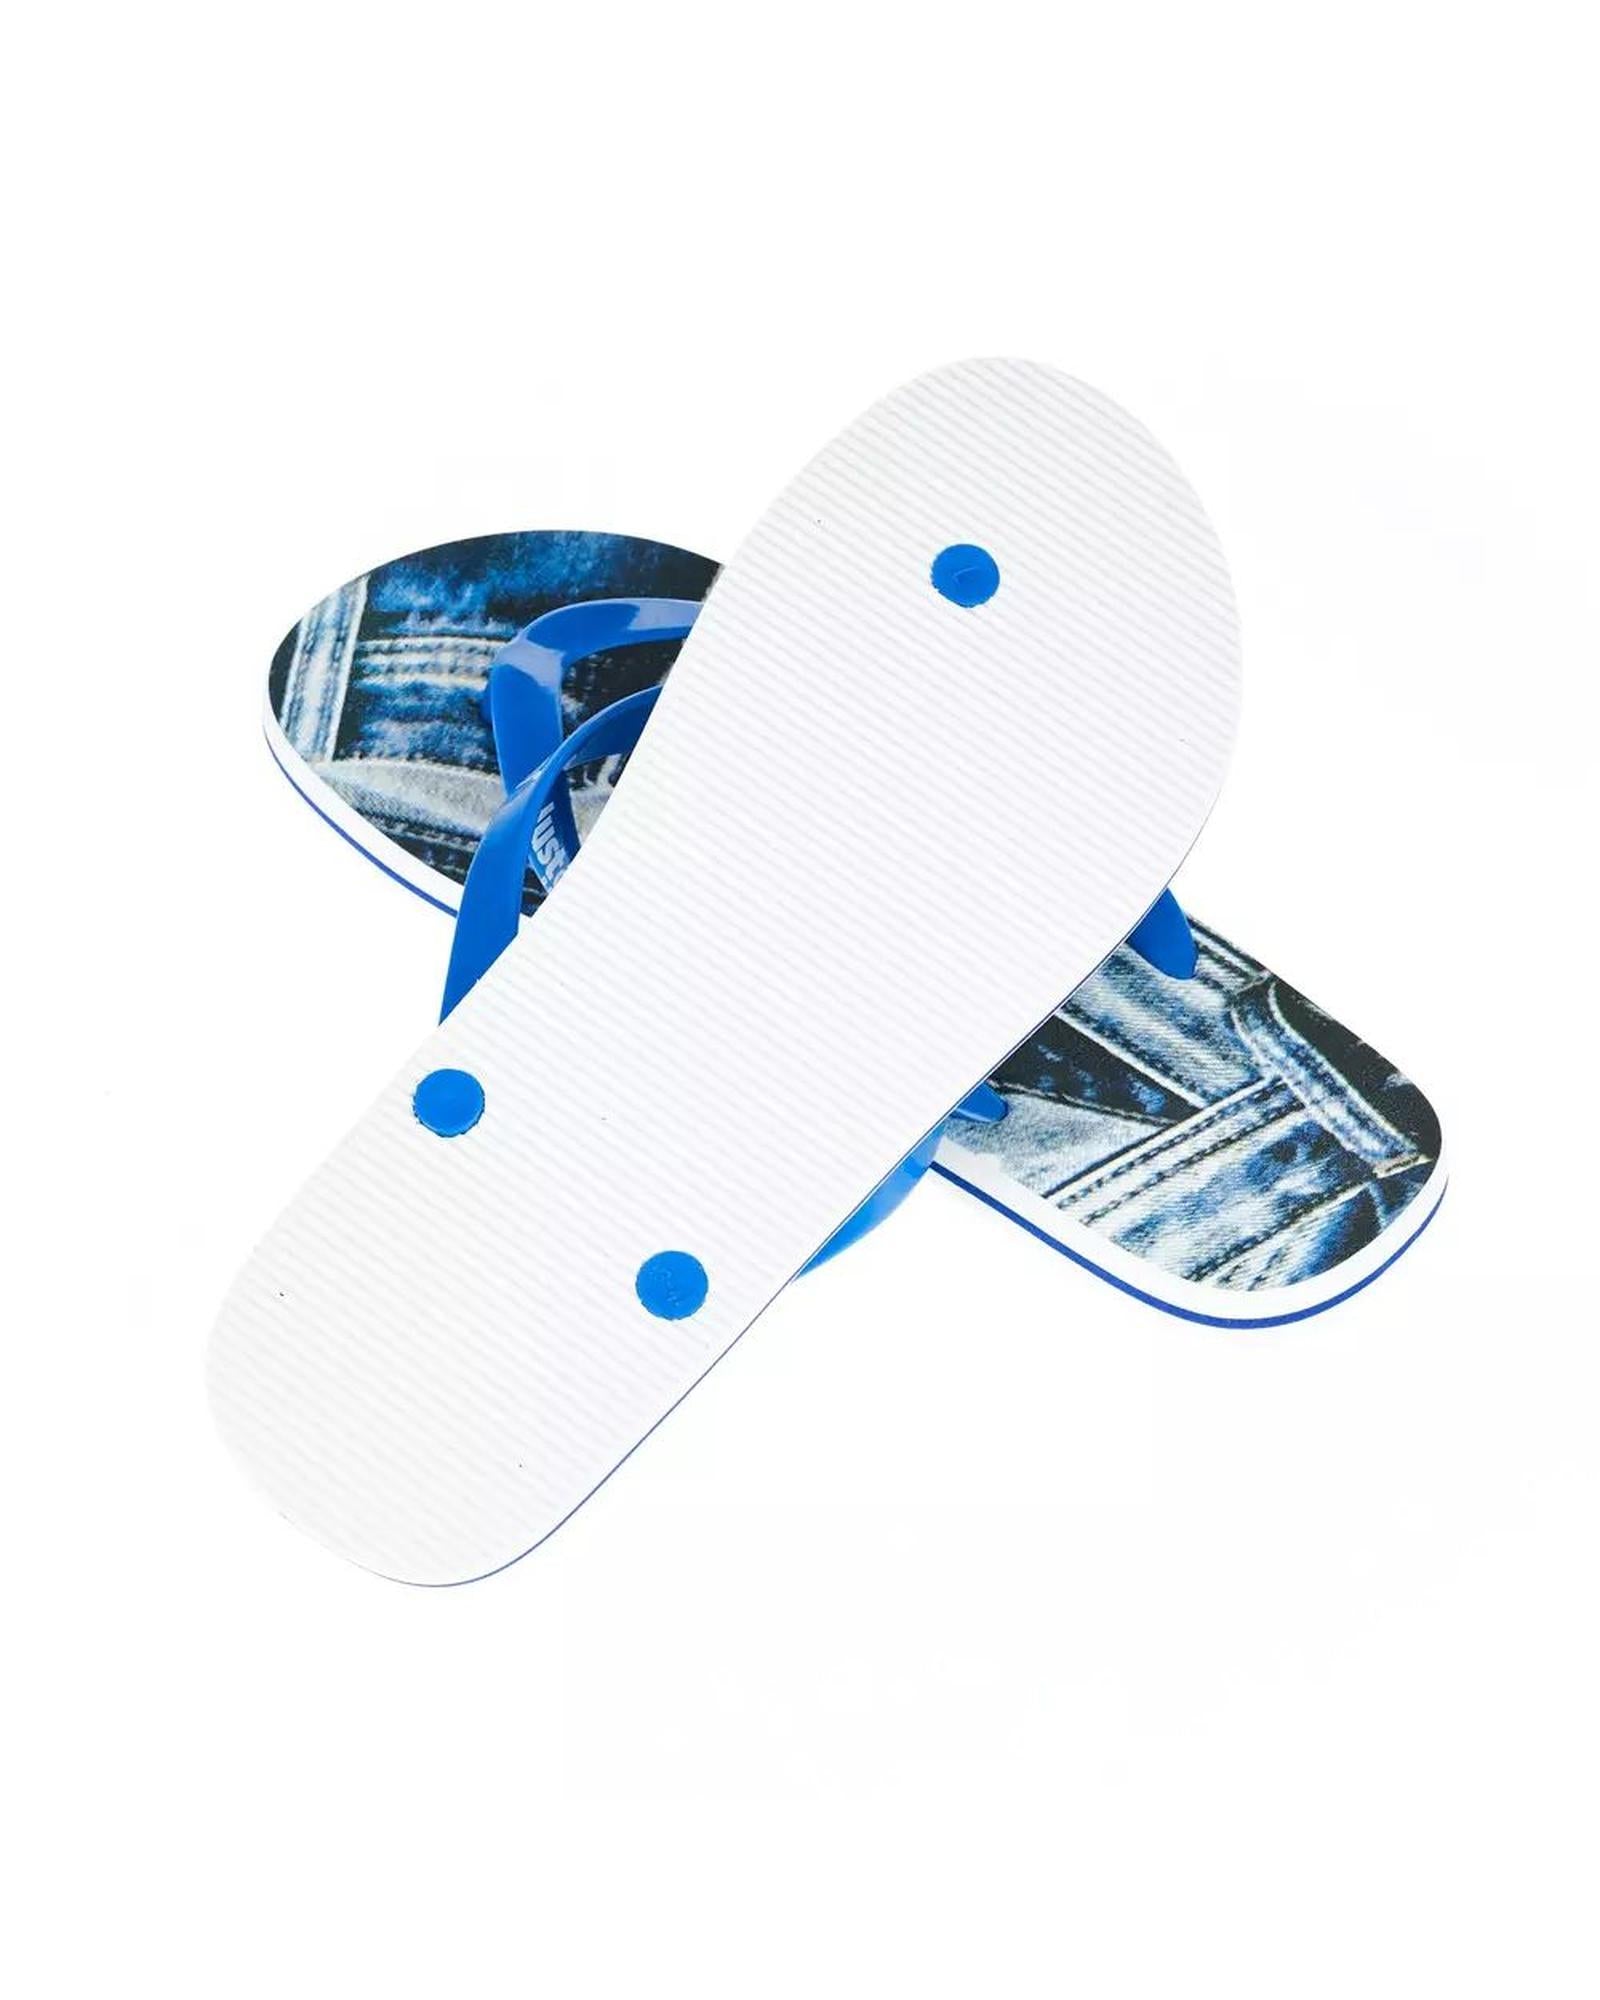 Men's Light Blue EVA Sandal - 42 EU